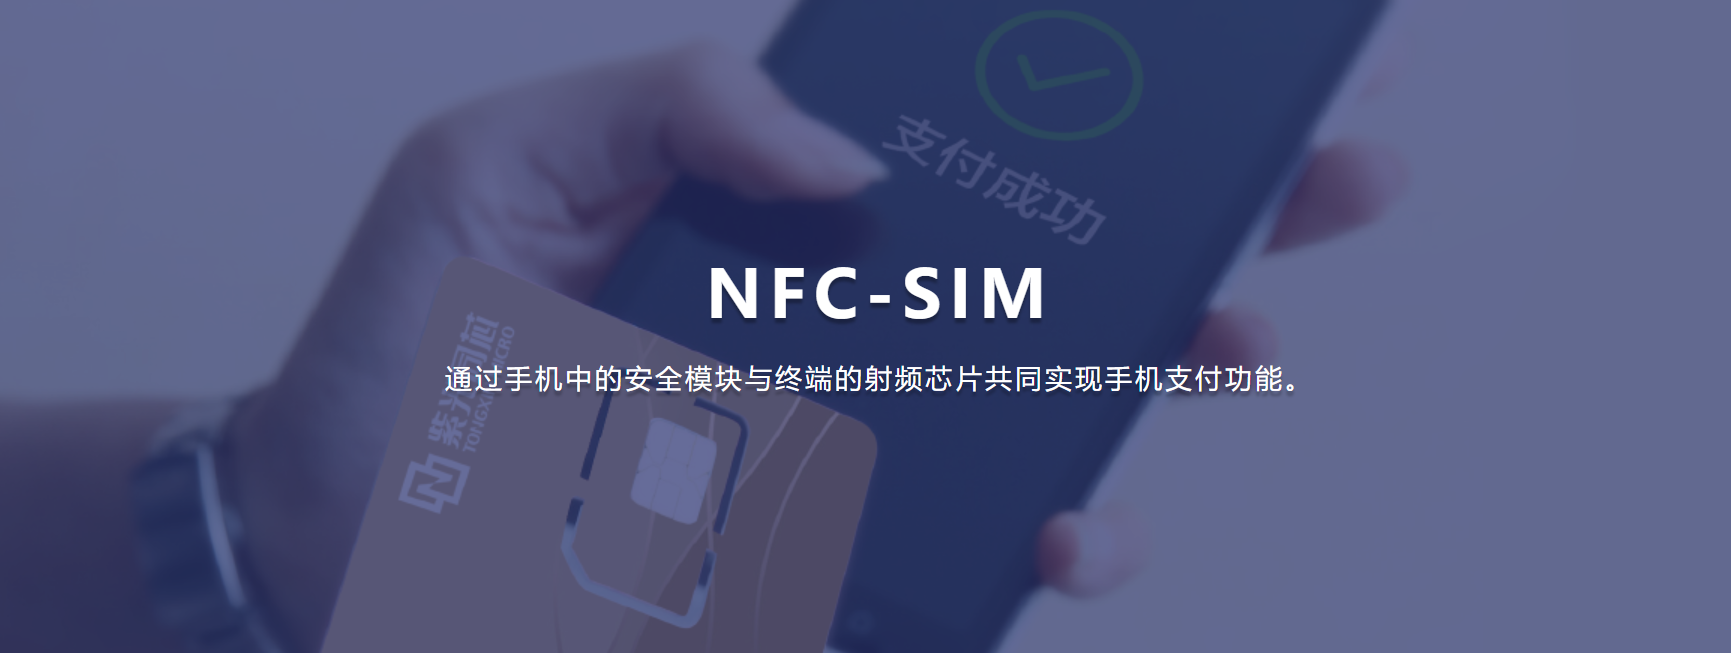 NFC-SIM芯片